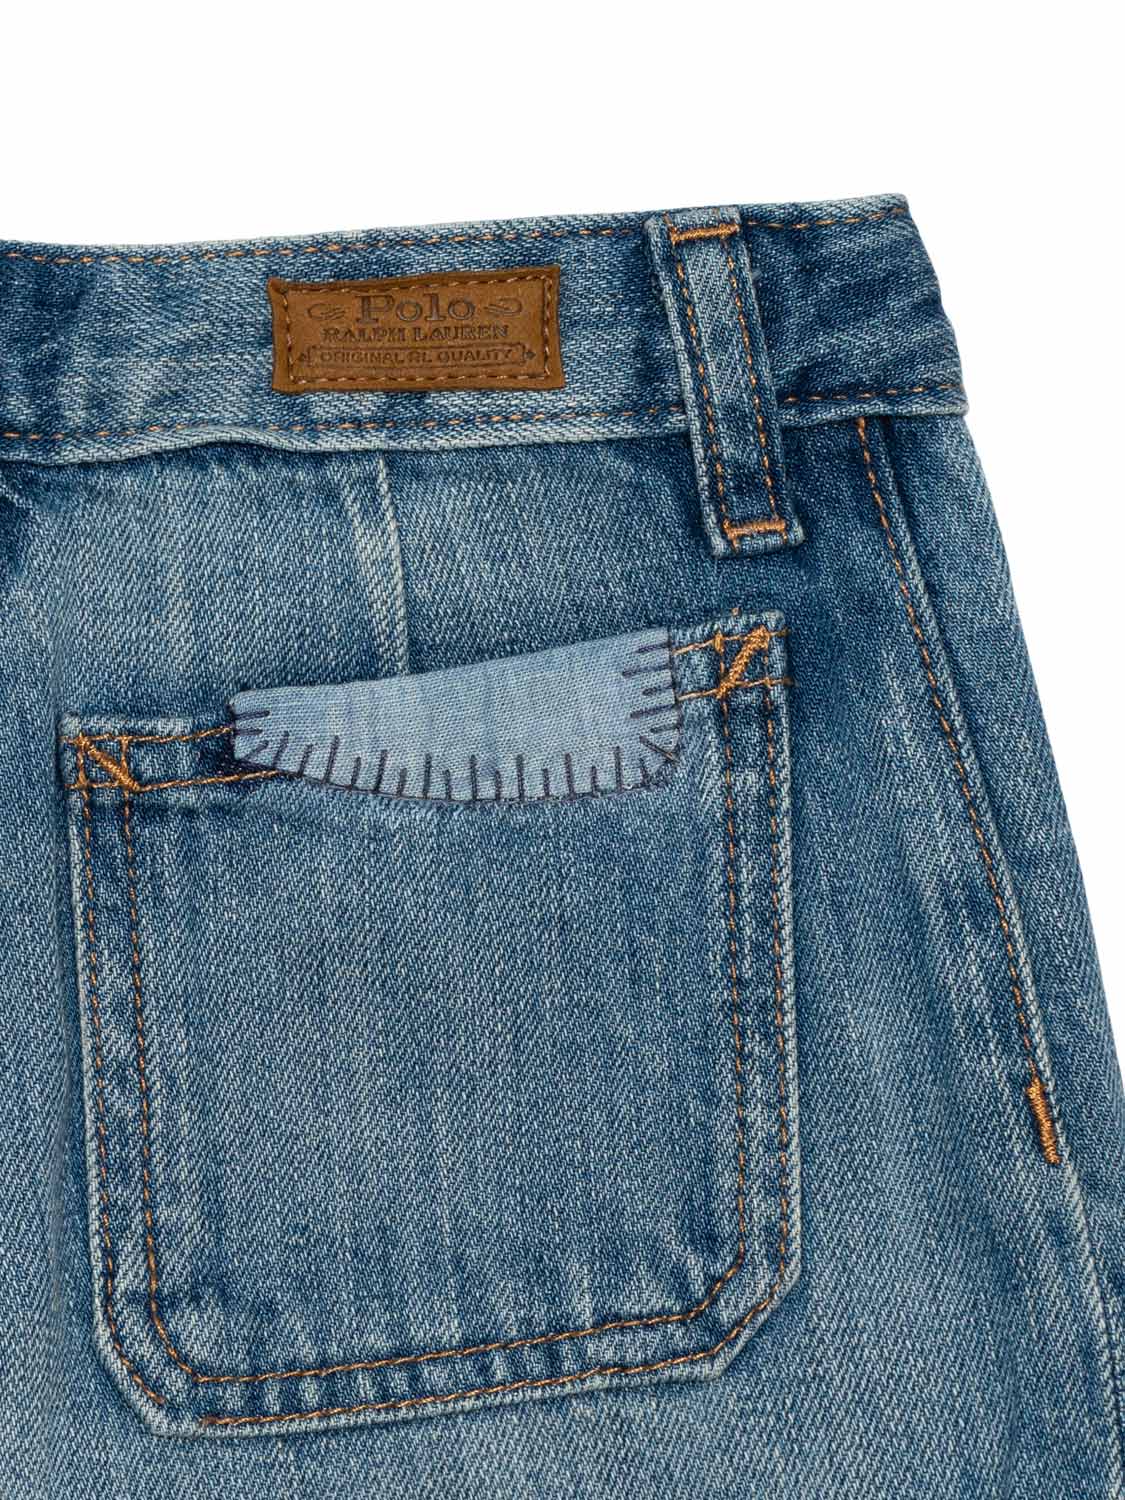 Jeans-Shorts mit Patches - Denim Blau